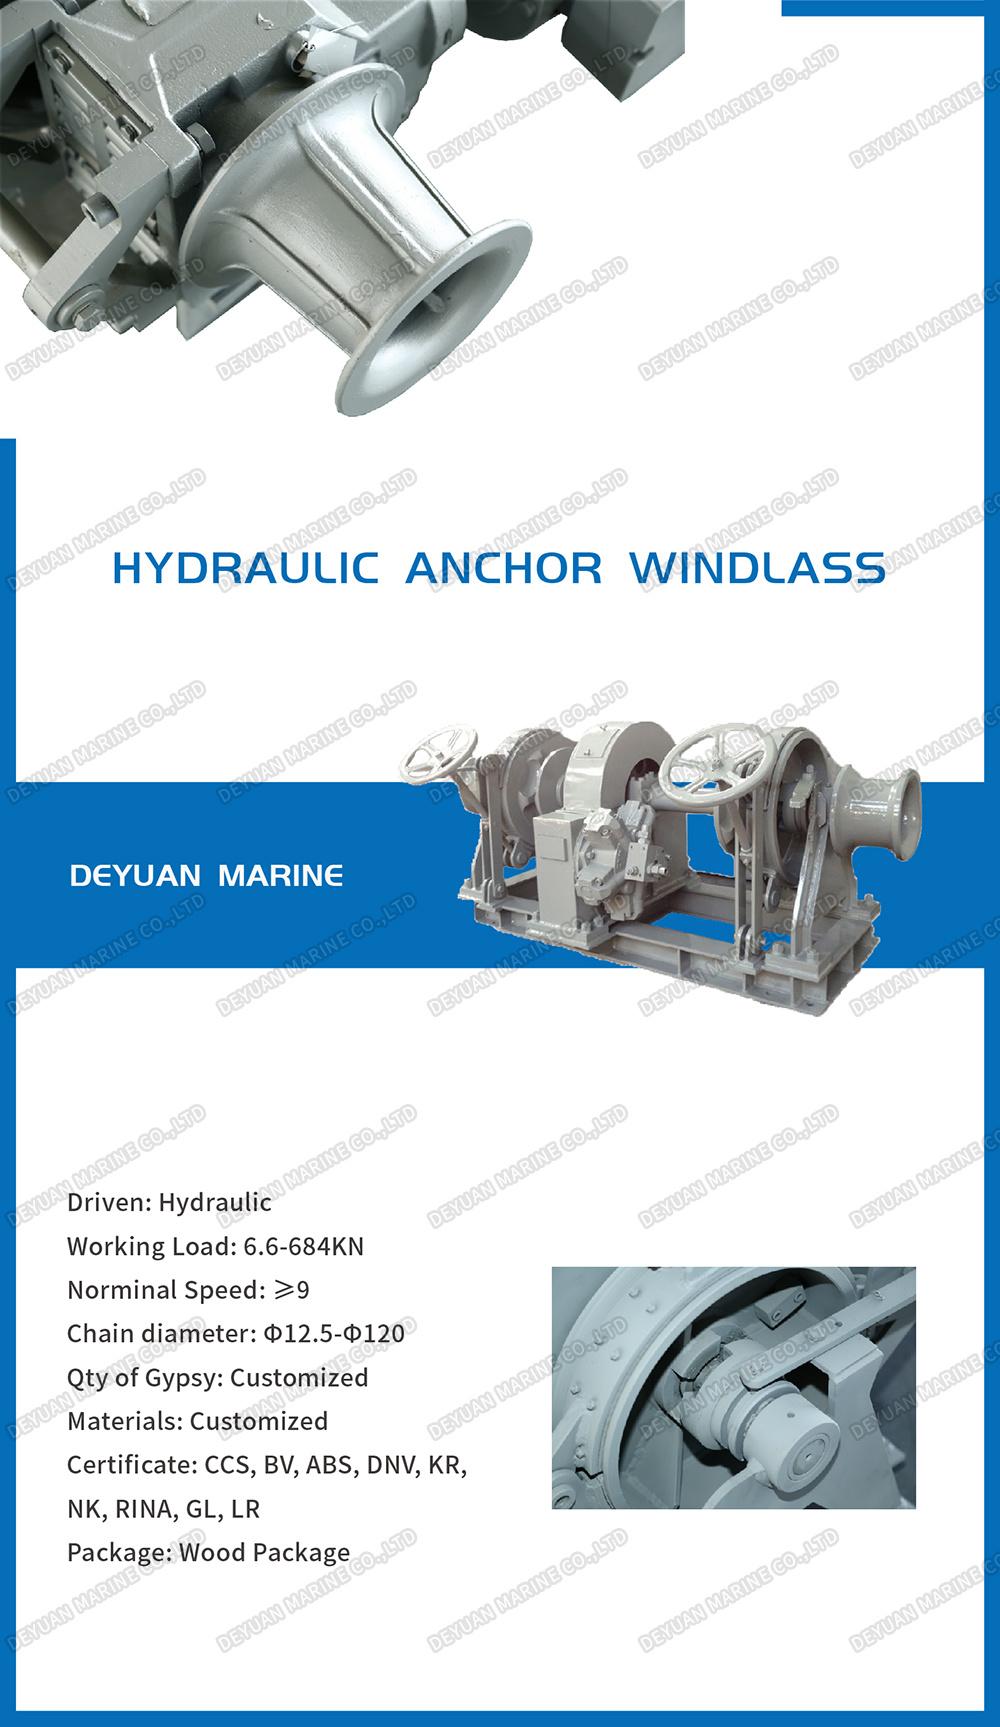 Marine Hydraulic Double Gypsies Anchor Windlass